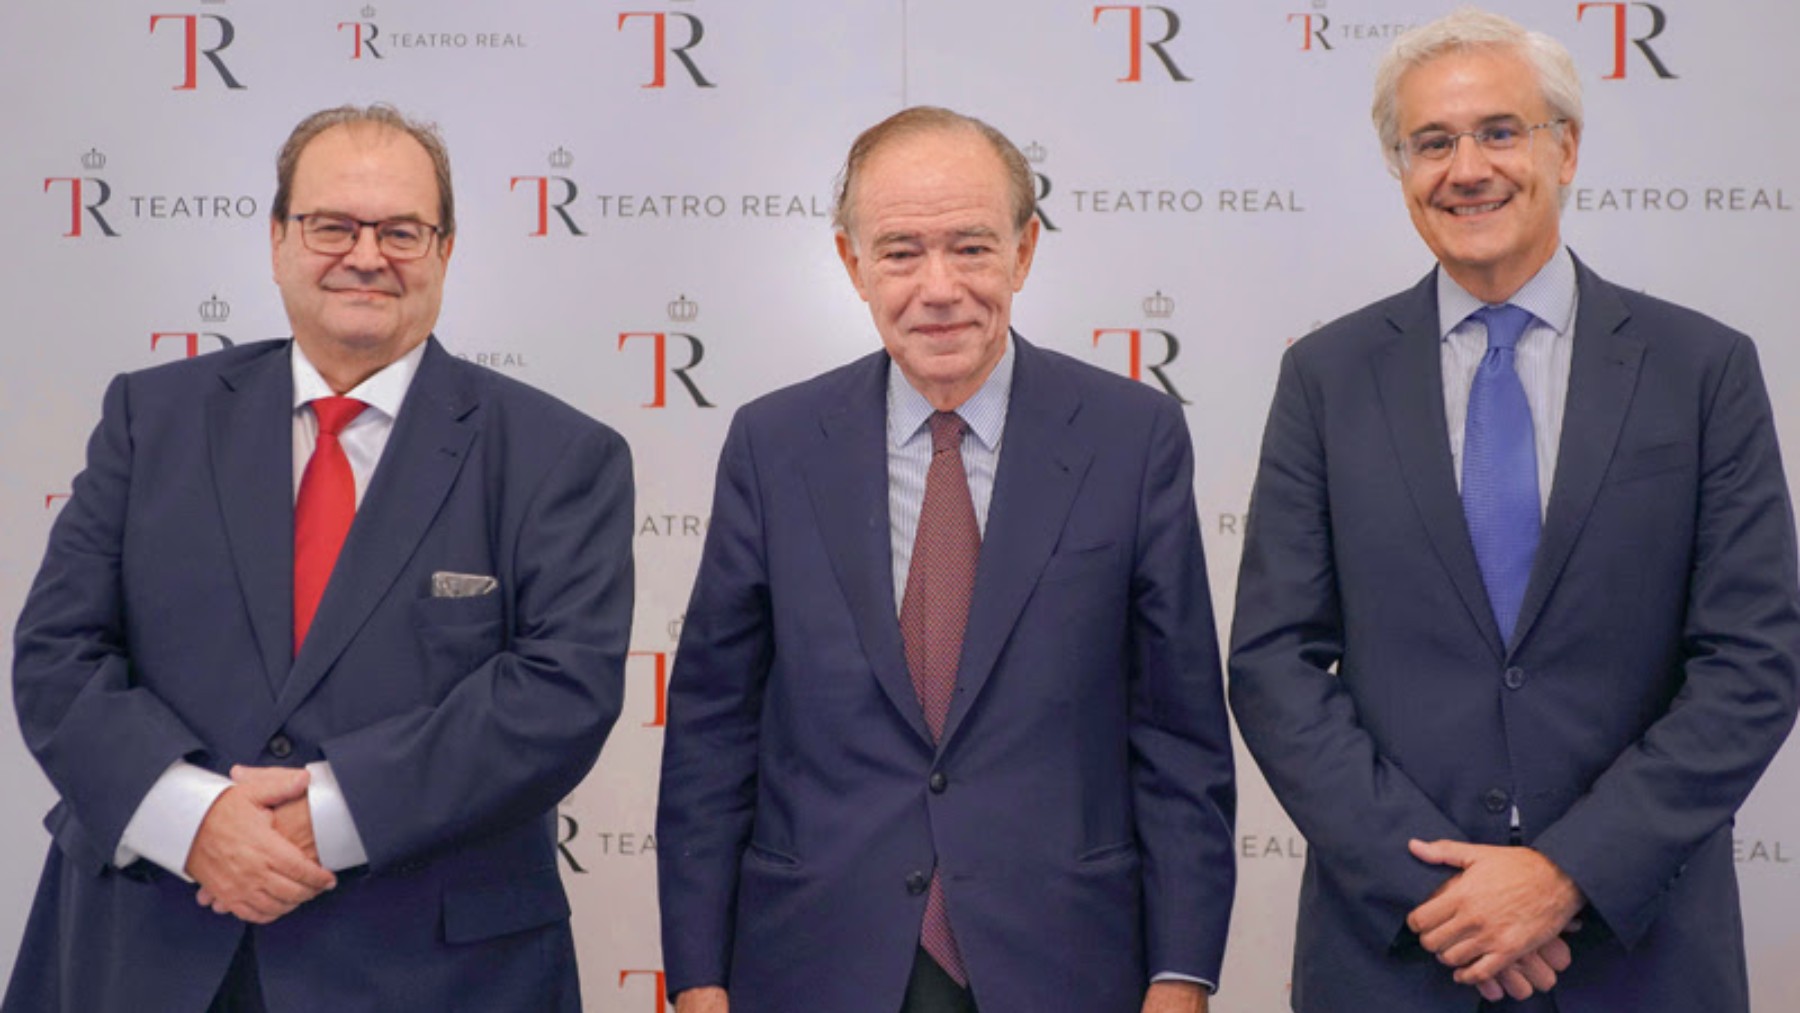 Fernando Núñez Rebolo, Presidente de Grupo Ibérica; Gregorio Marañón, Presidente del Teatro Real; e Ignacio García-Belenguer, Director General del Teatro Real.